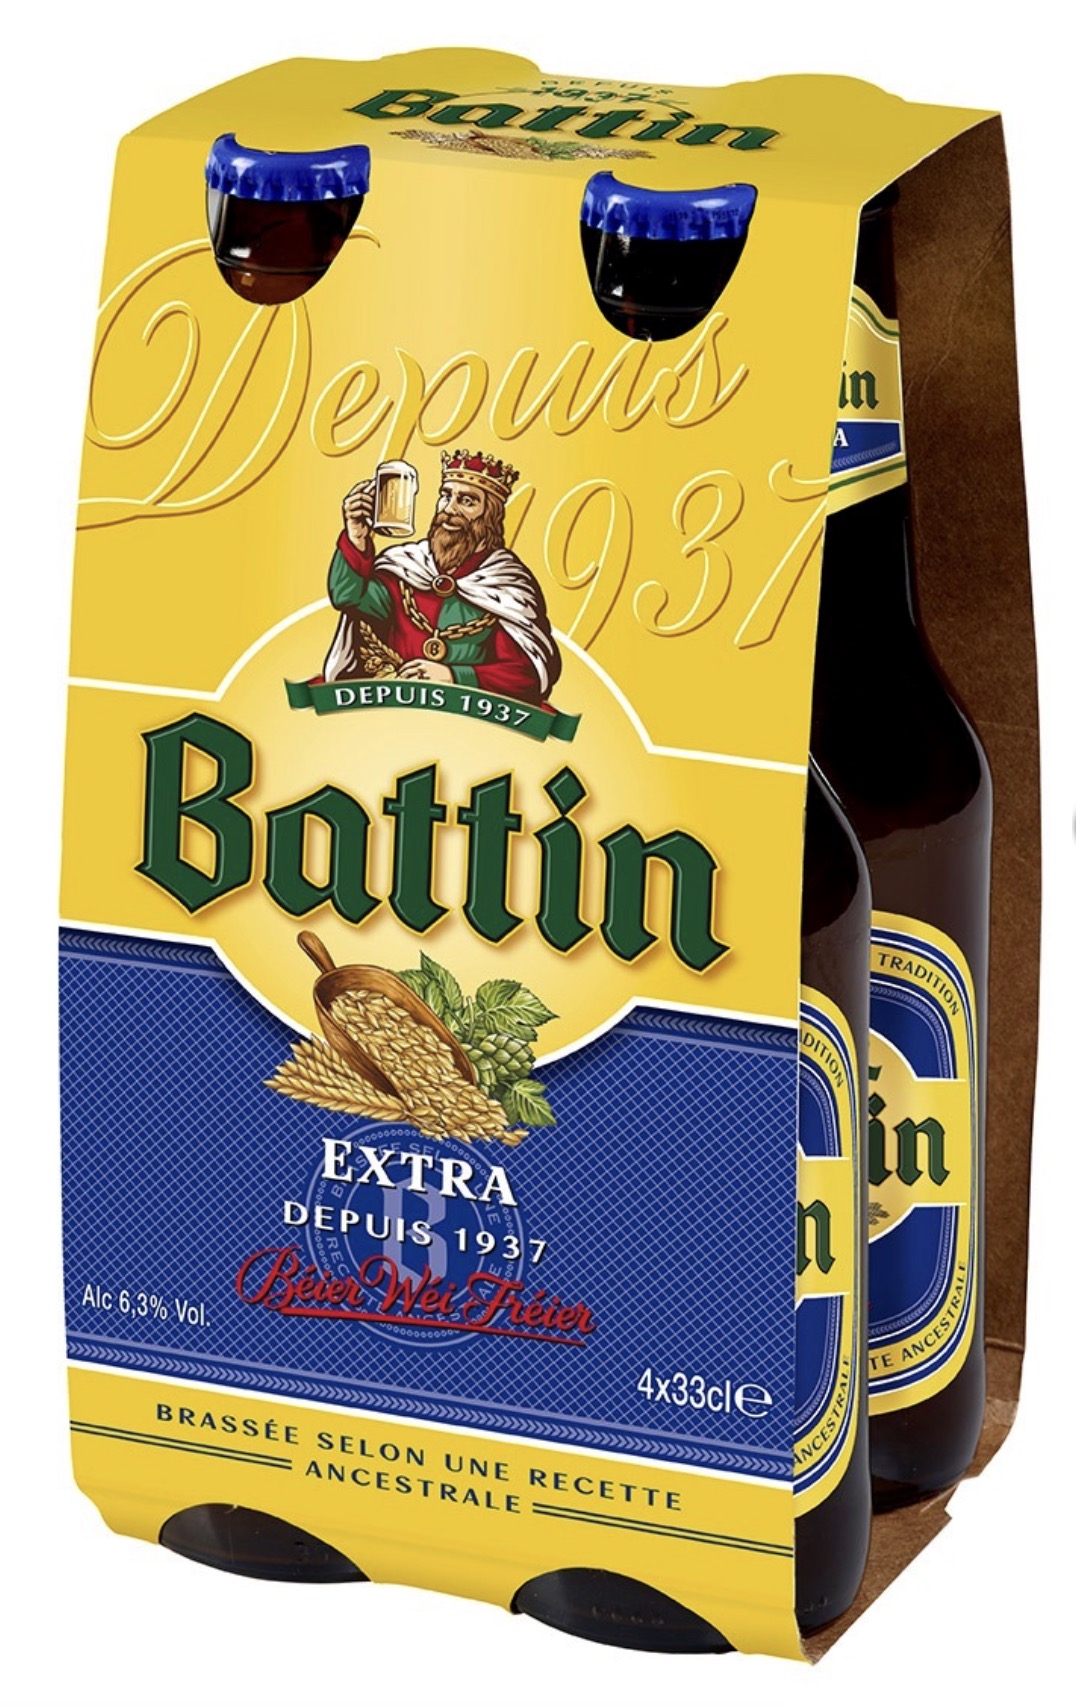 Battin Blond Extra 24 x 33cl